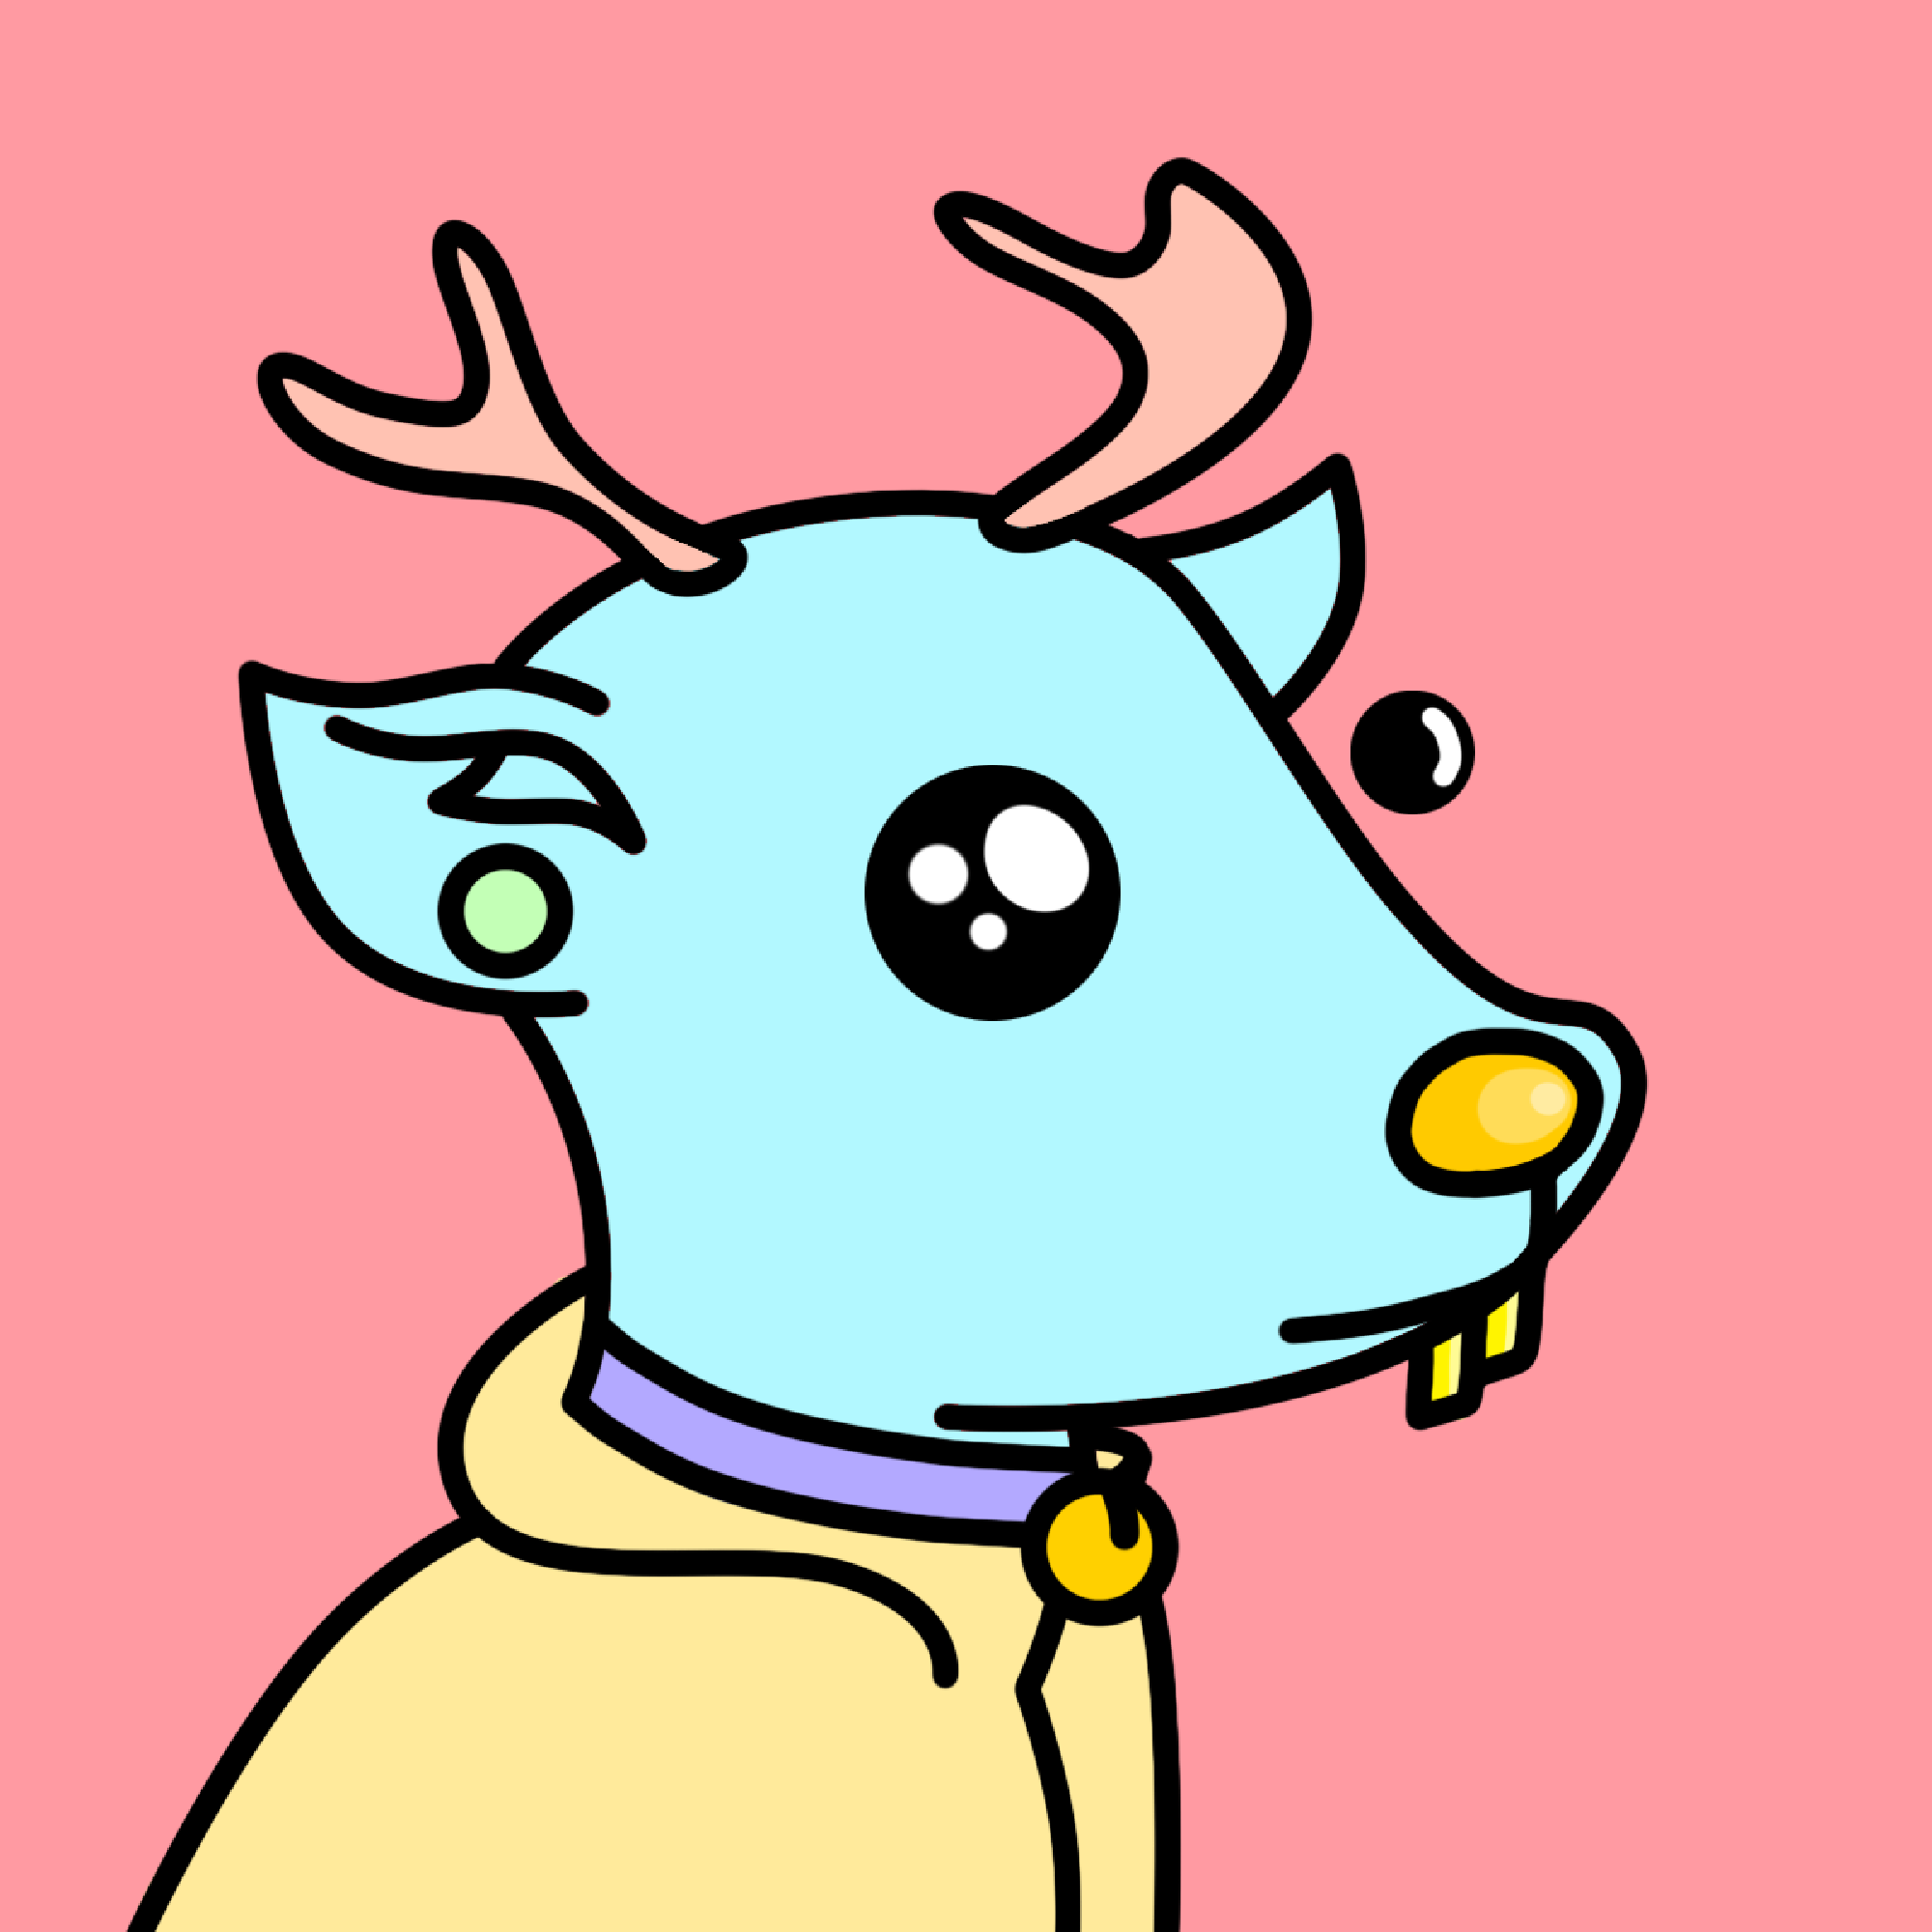 Doodled Deer#3616